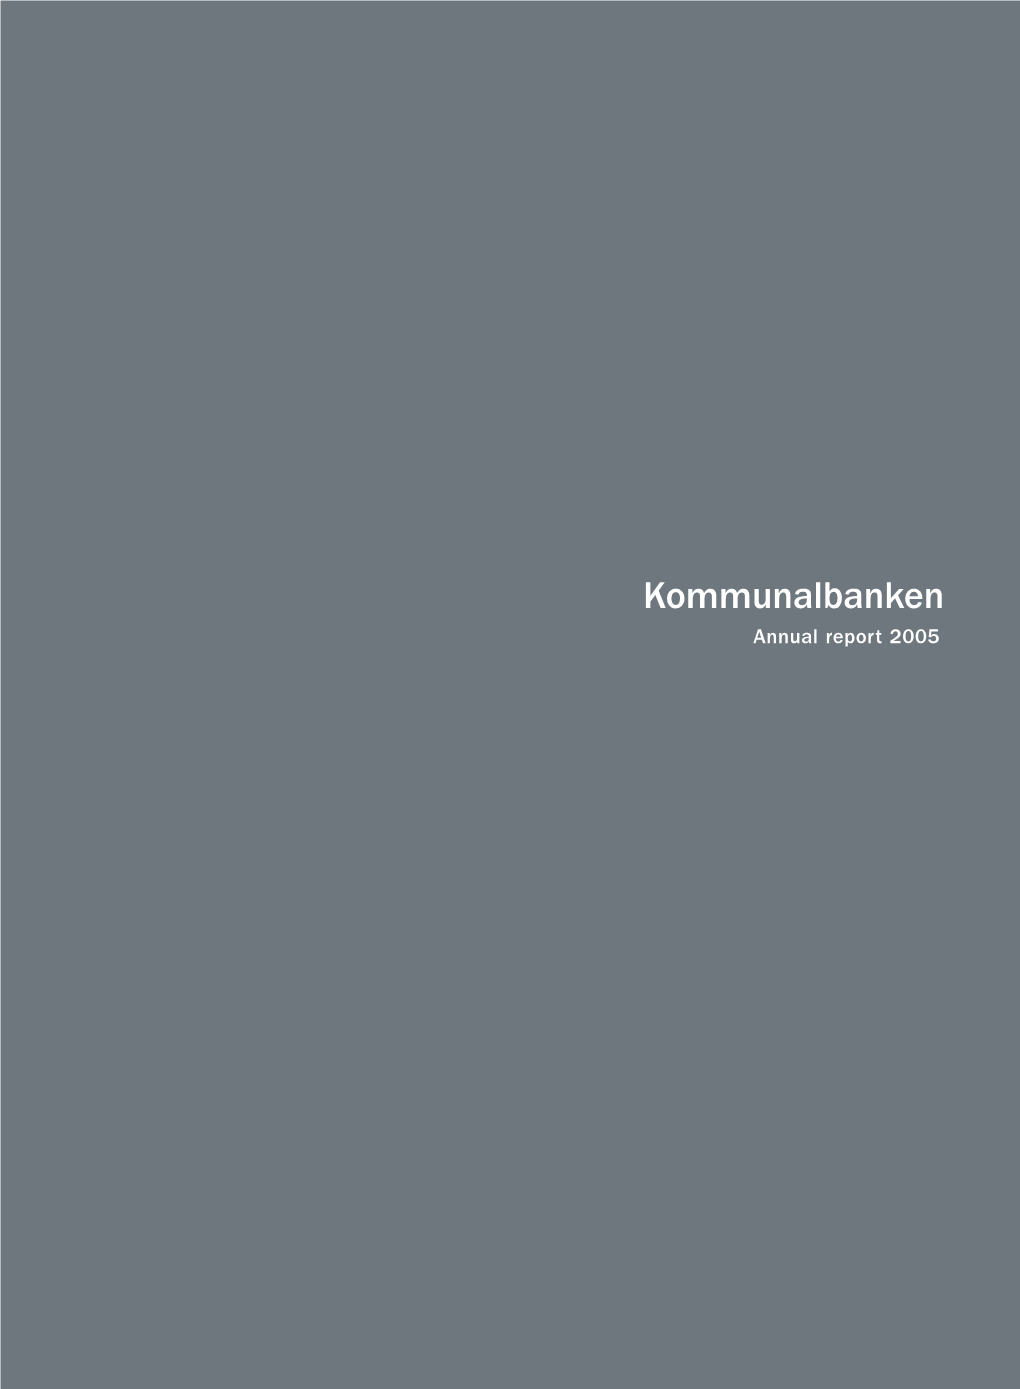 Kommunalbanken Annual Report 2005